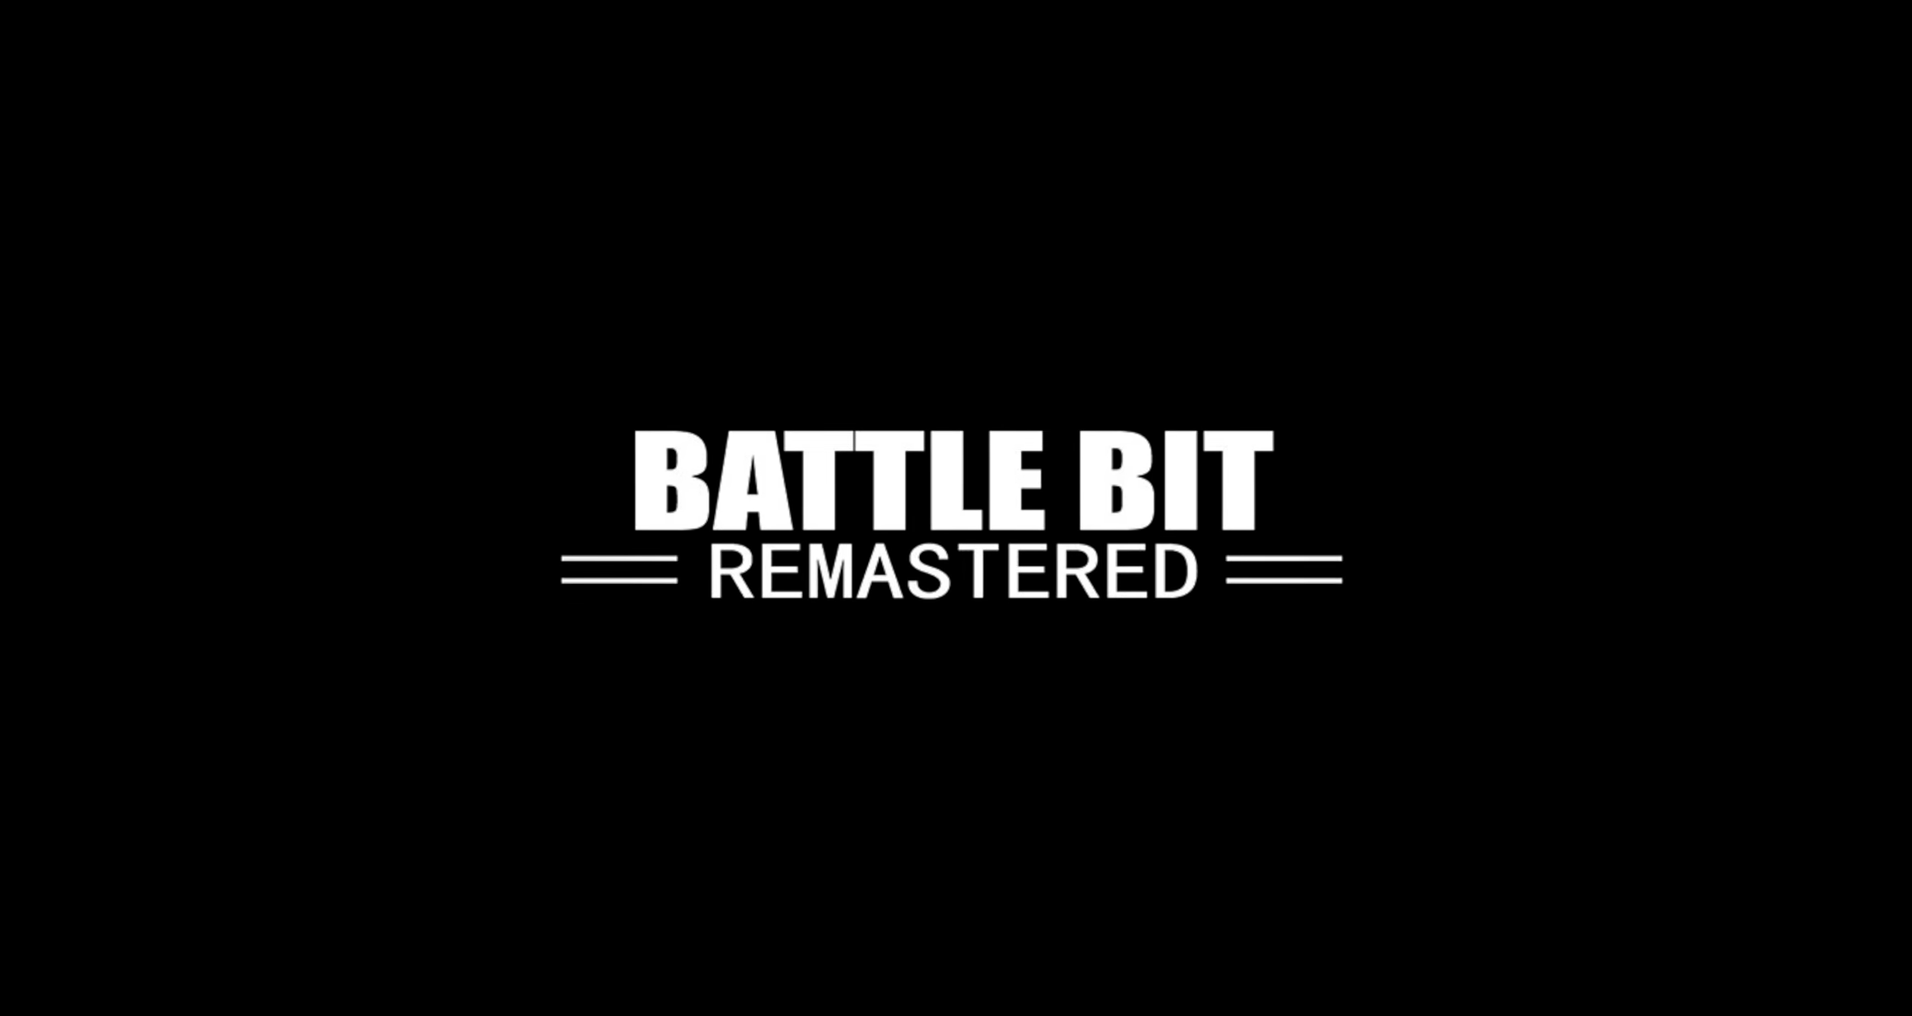 Is there Battlebit Original? BattleBit Remastered Explained